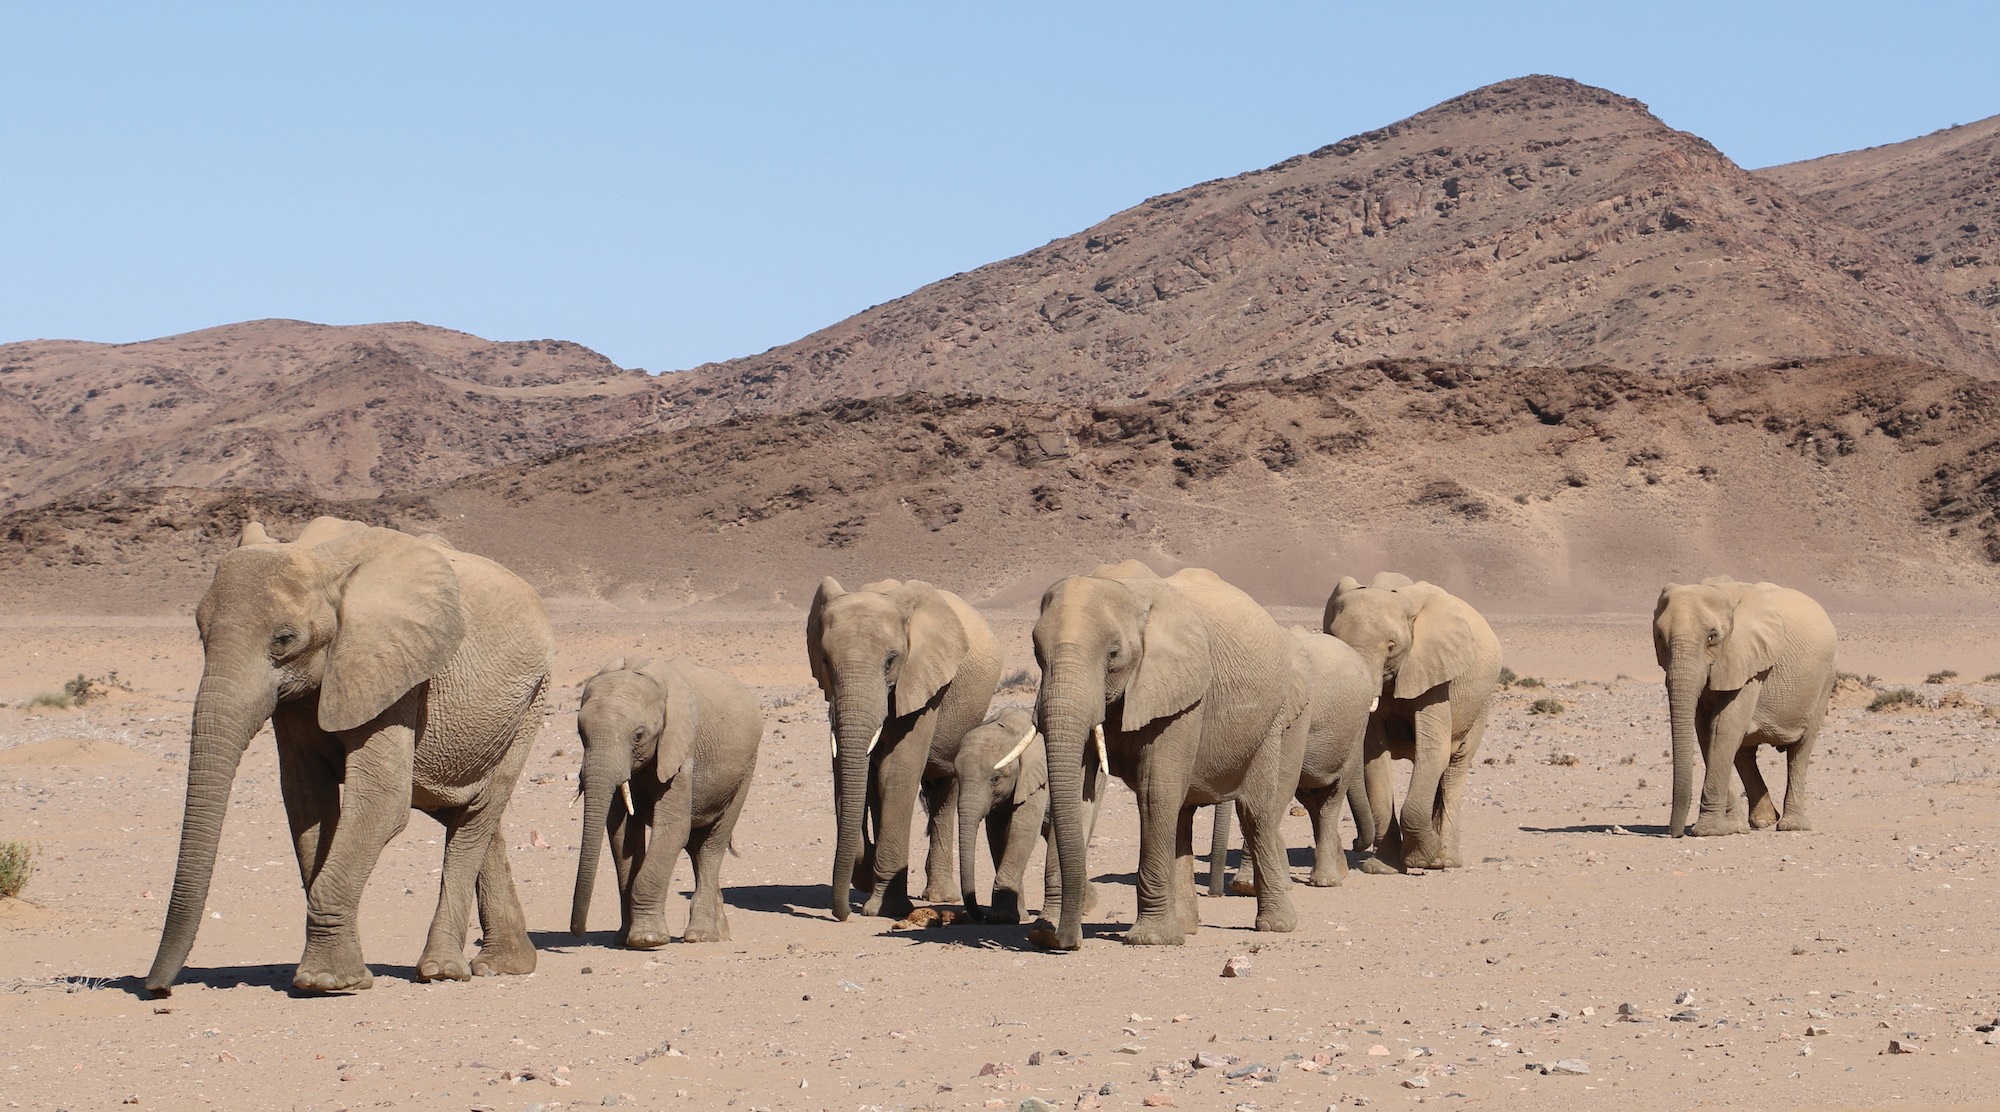 A family of elephants walks through Namibian desert.